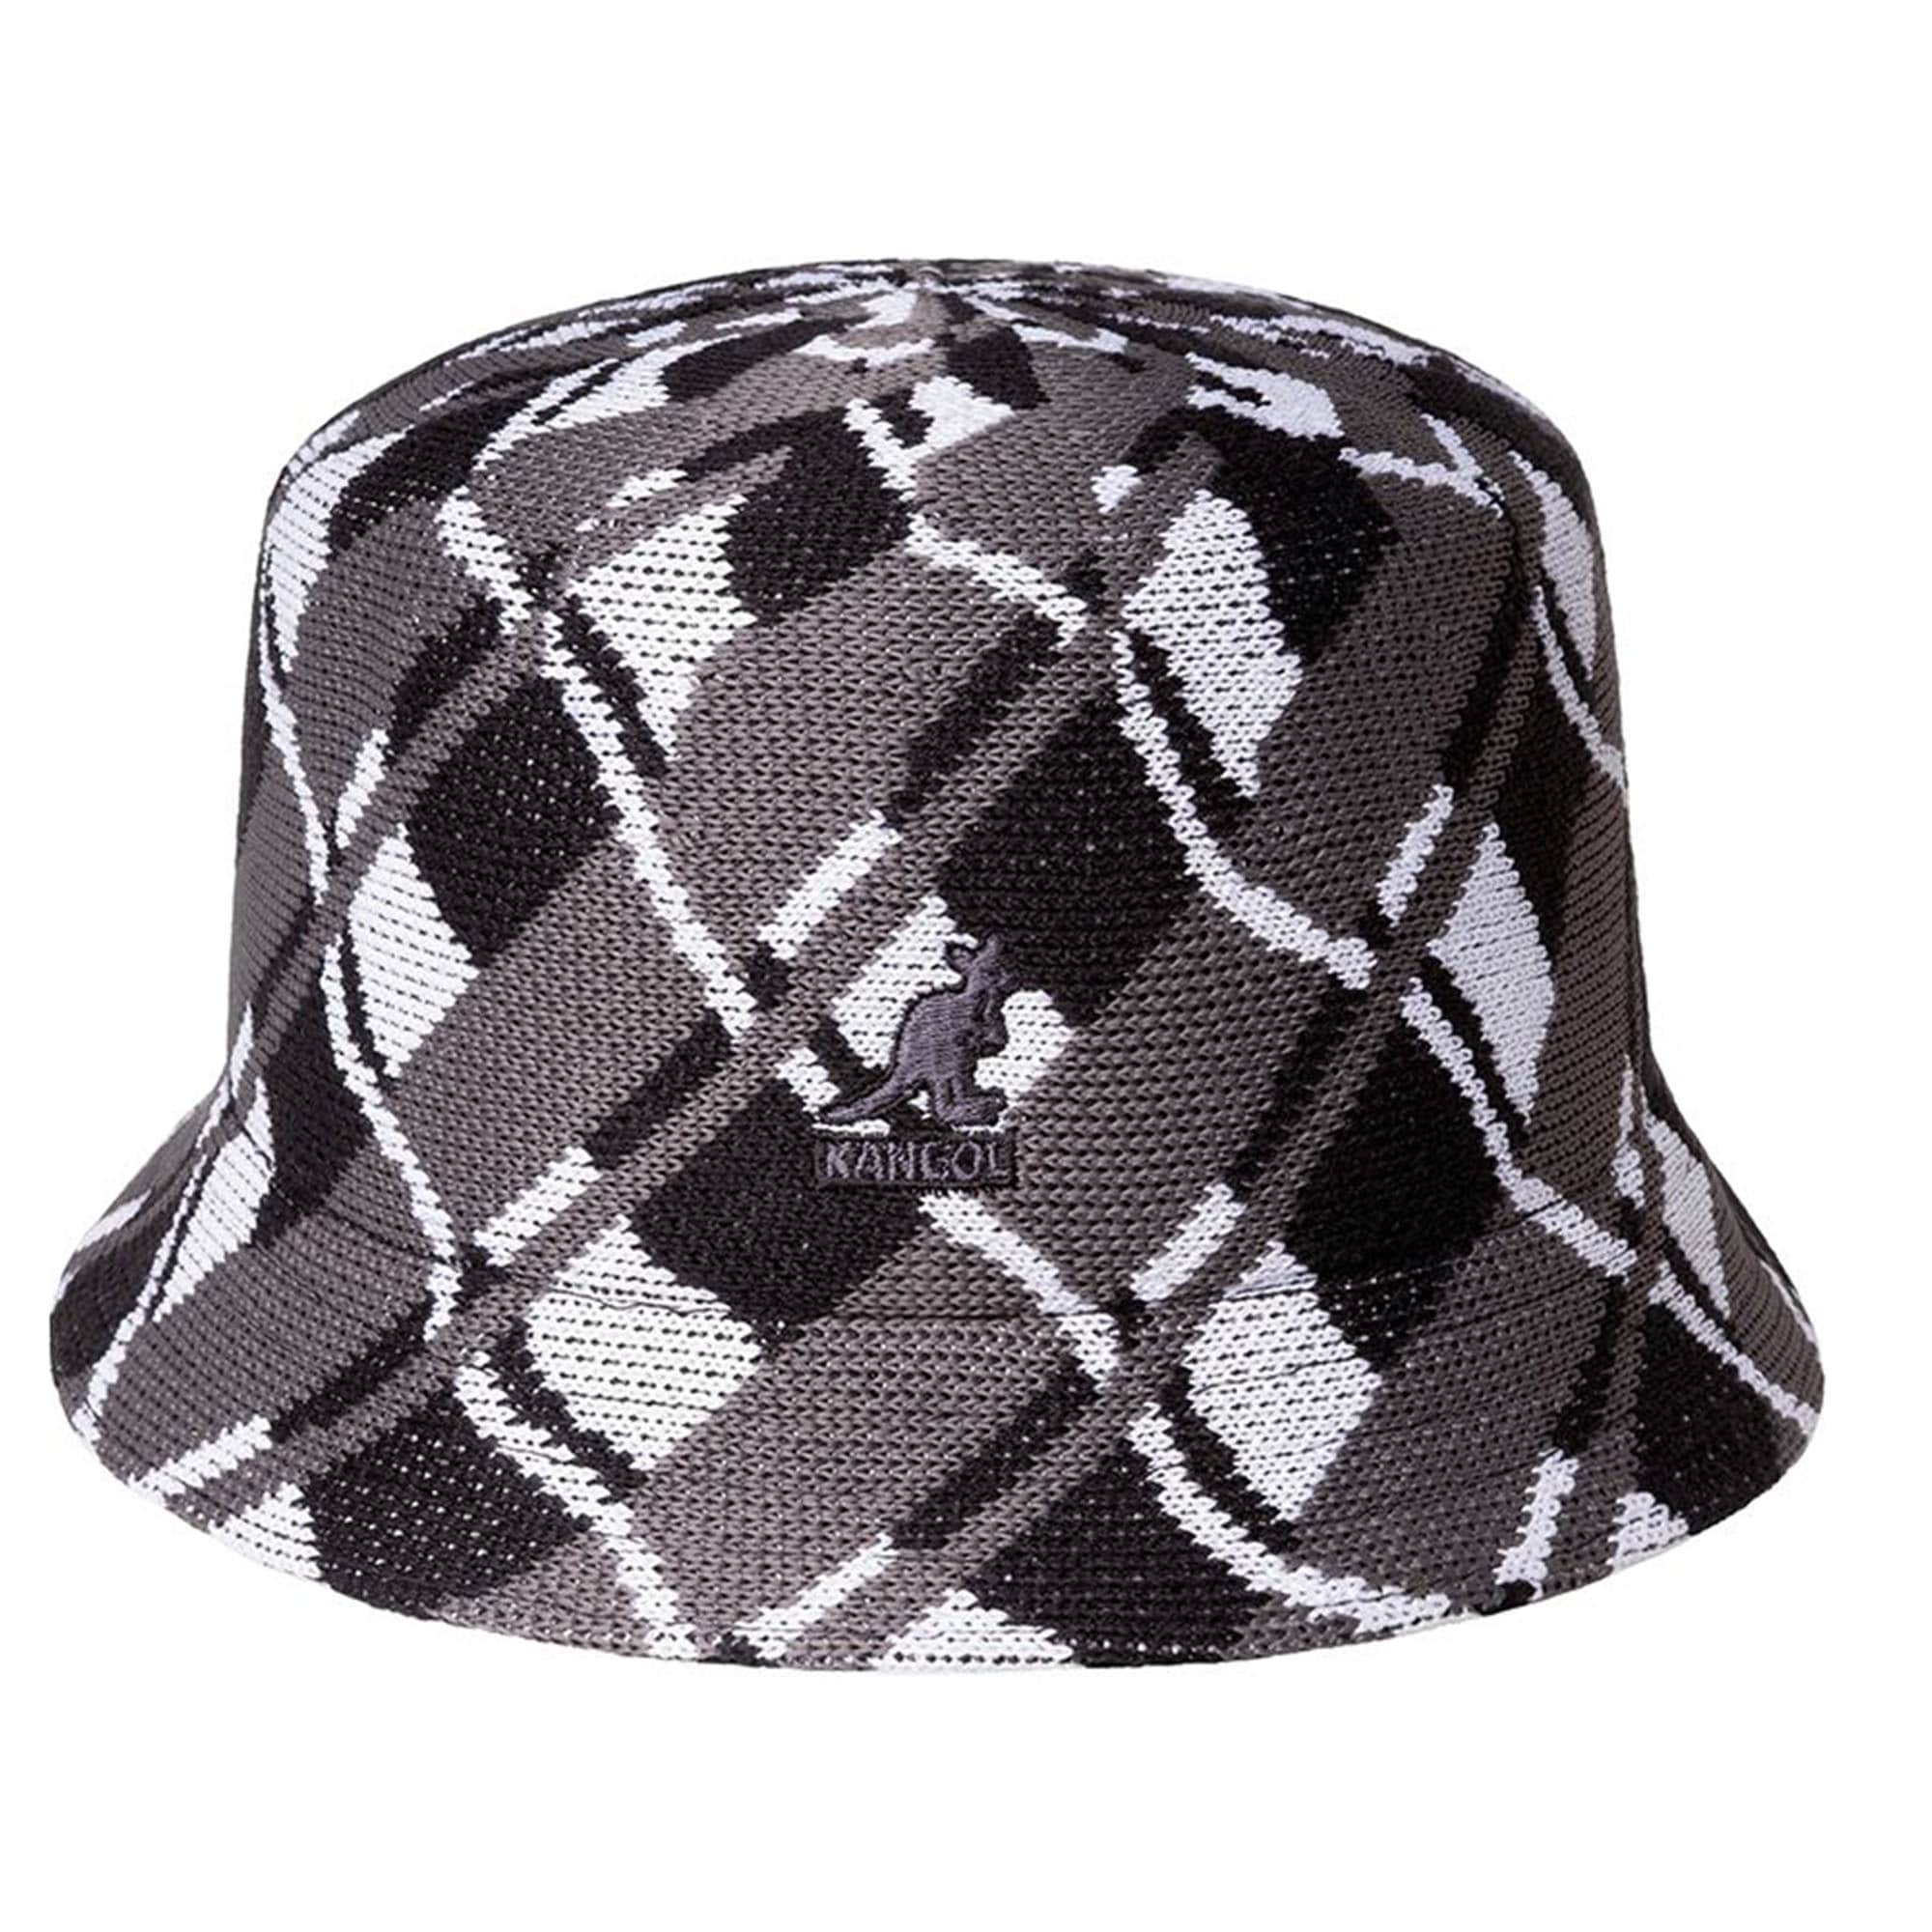 Kangol Tropic Wavy Pane Bin Bucket Hat